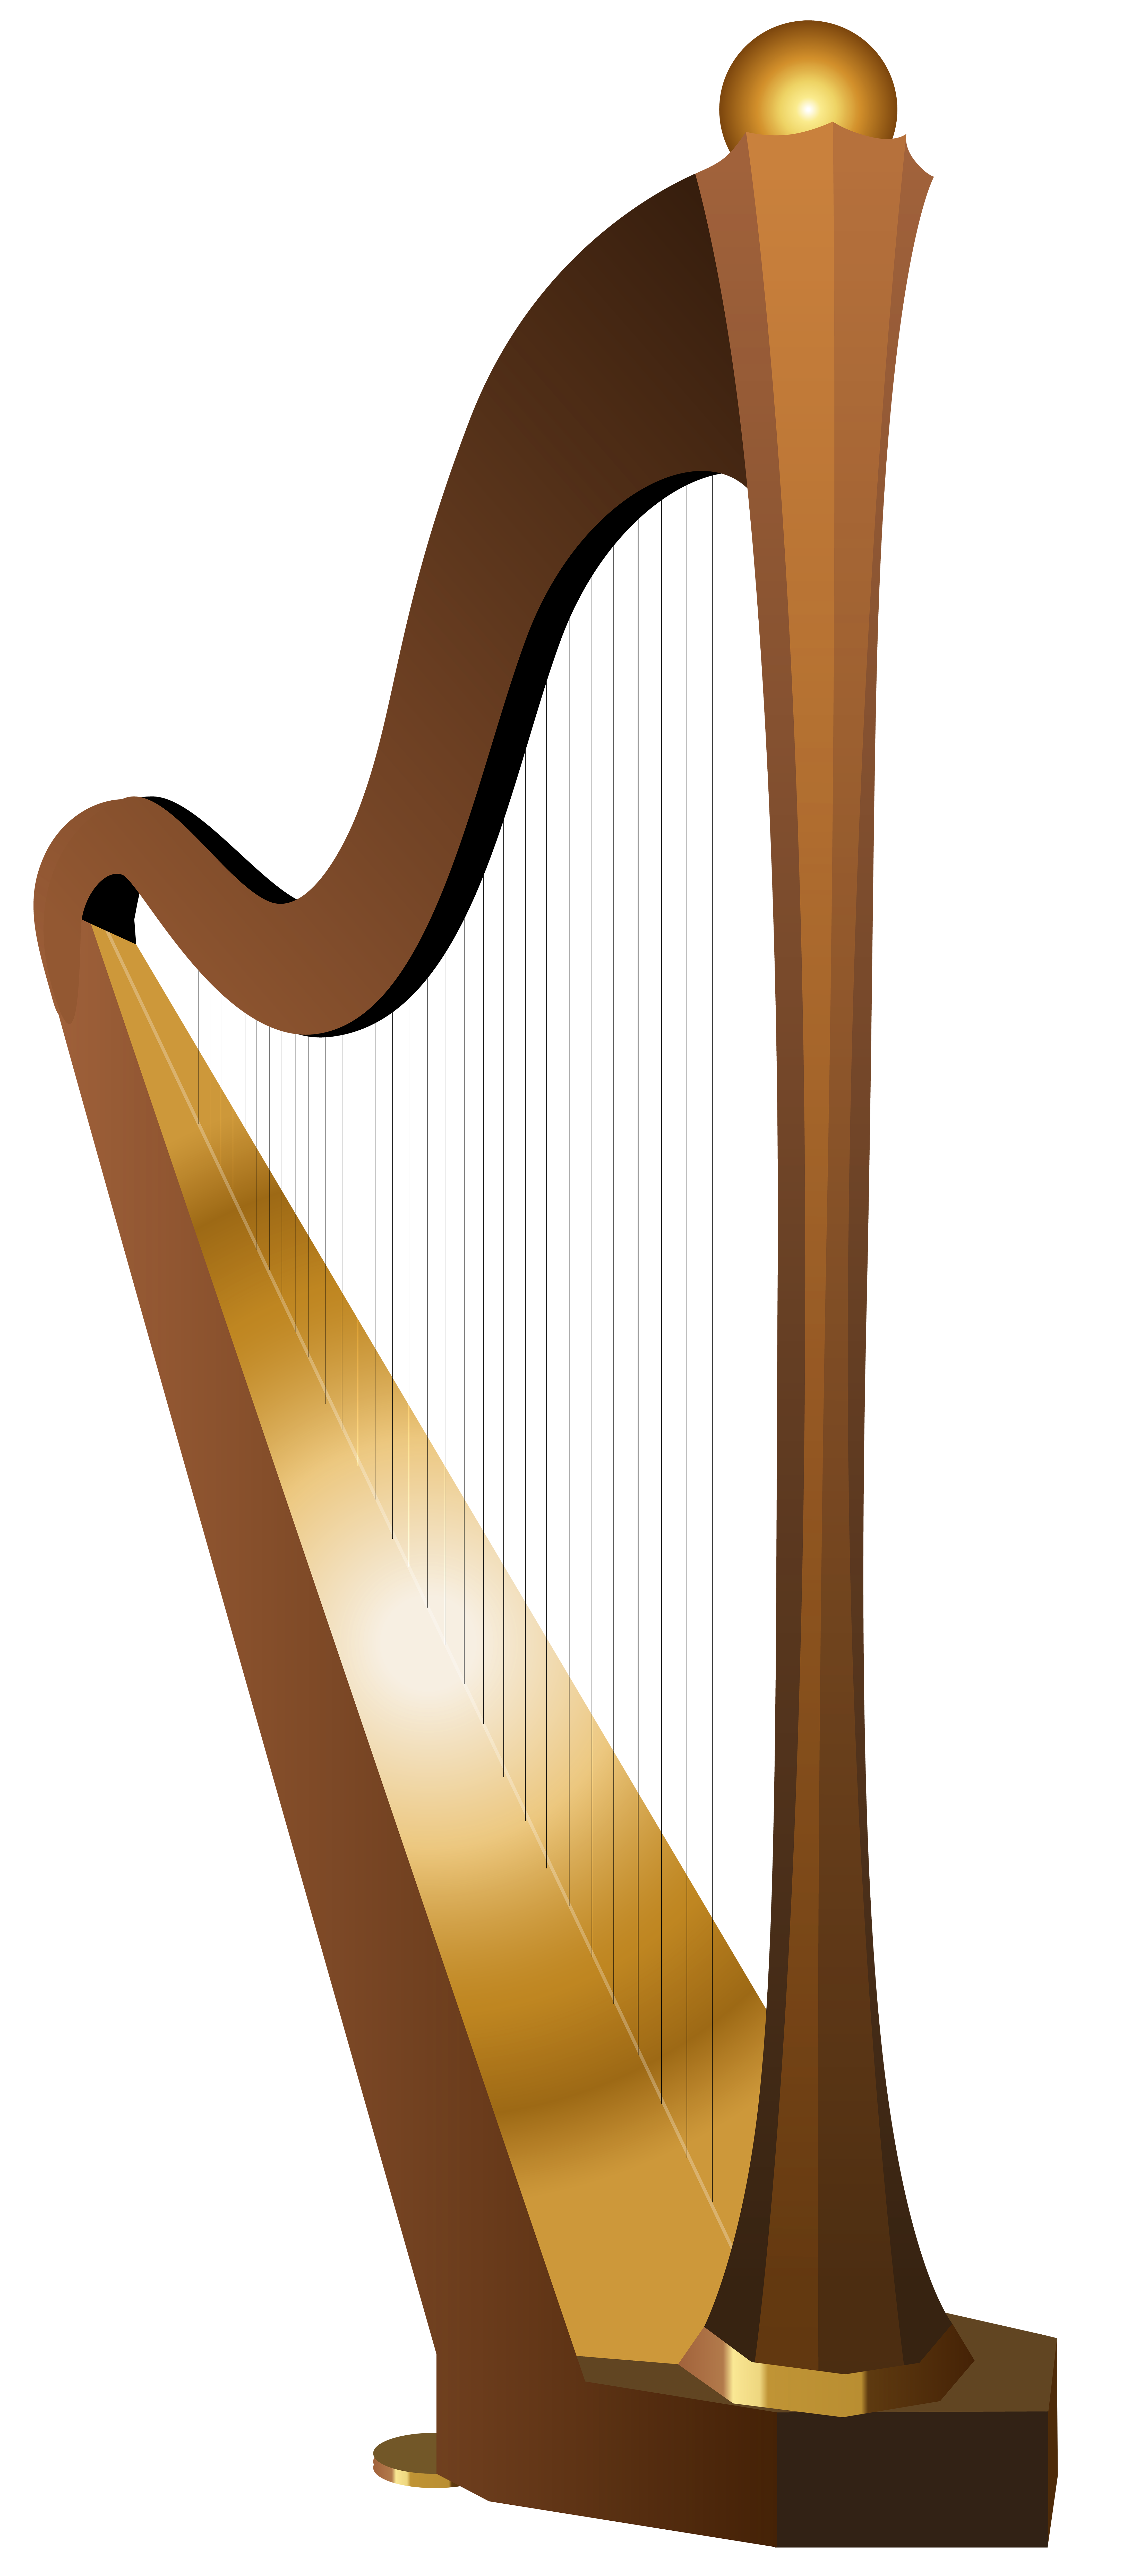 Harp Transparent PNG Clip Art Image